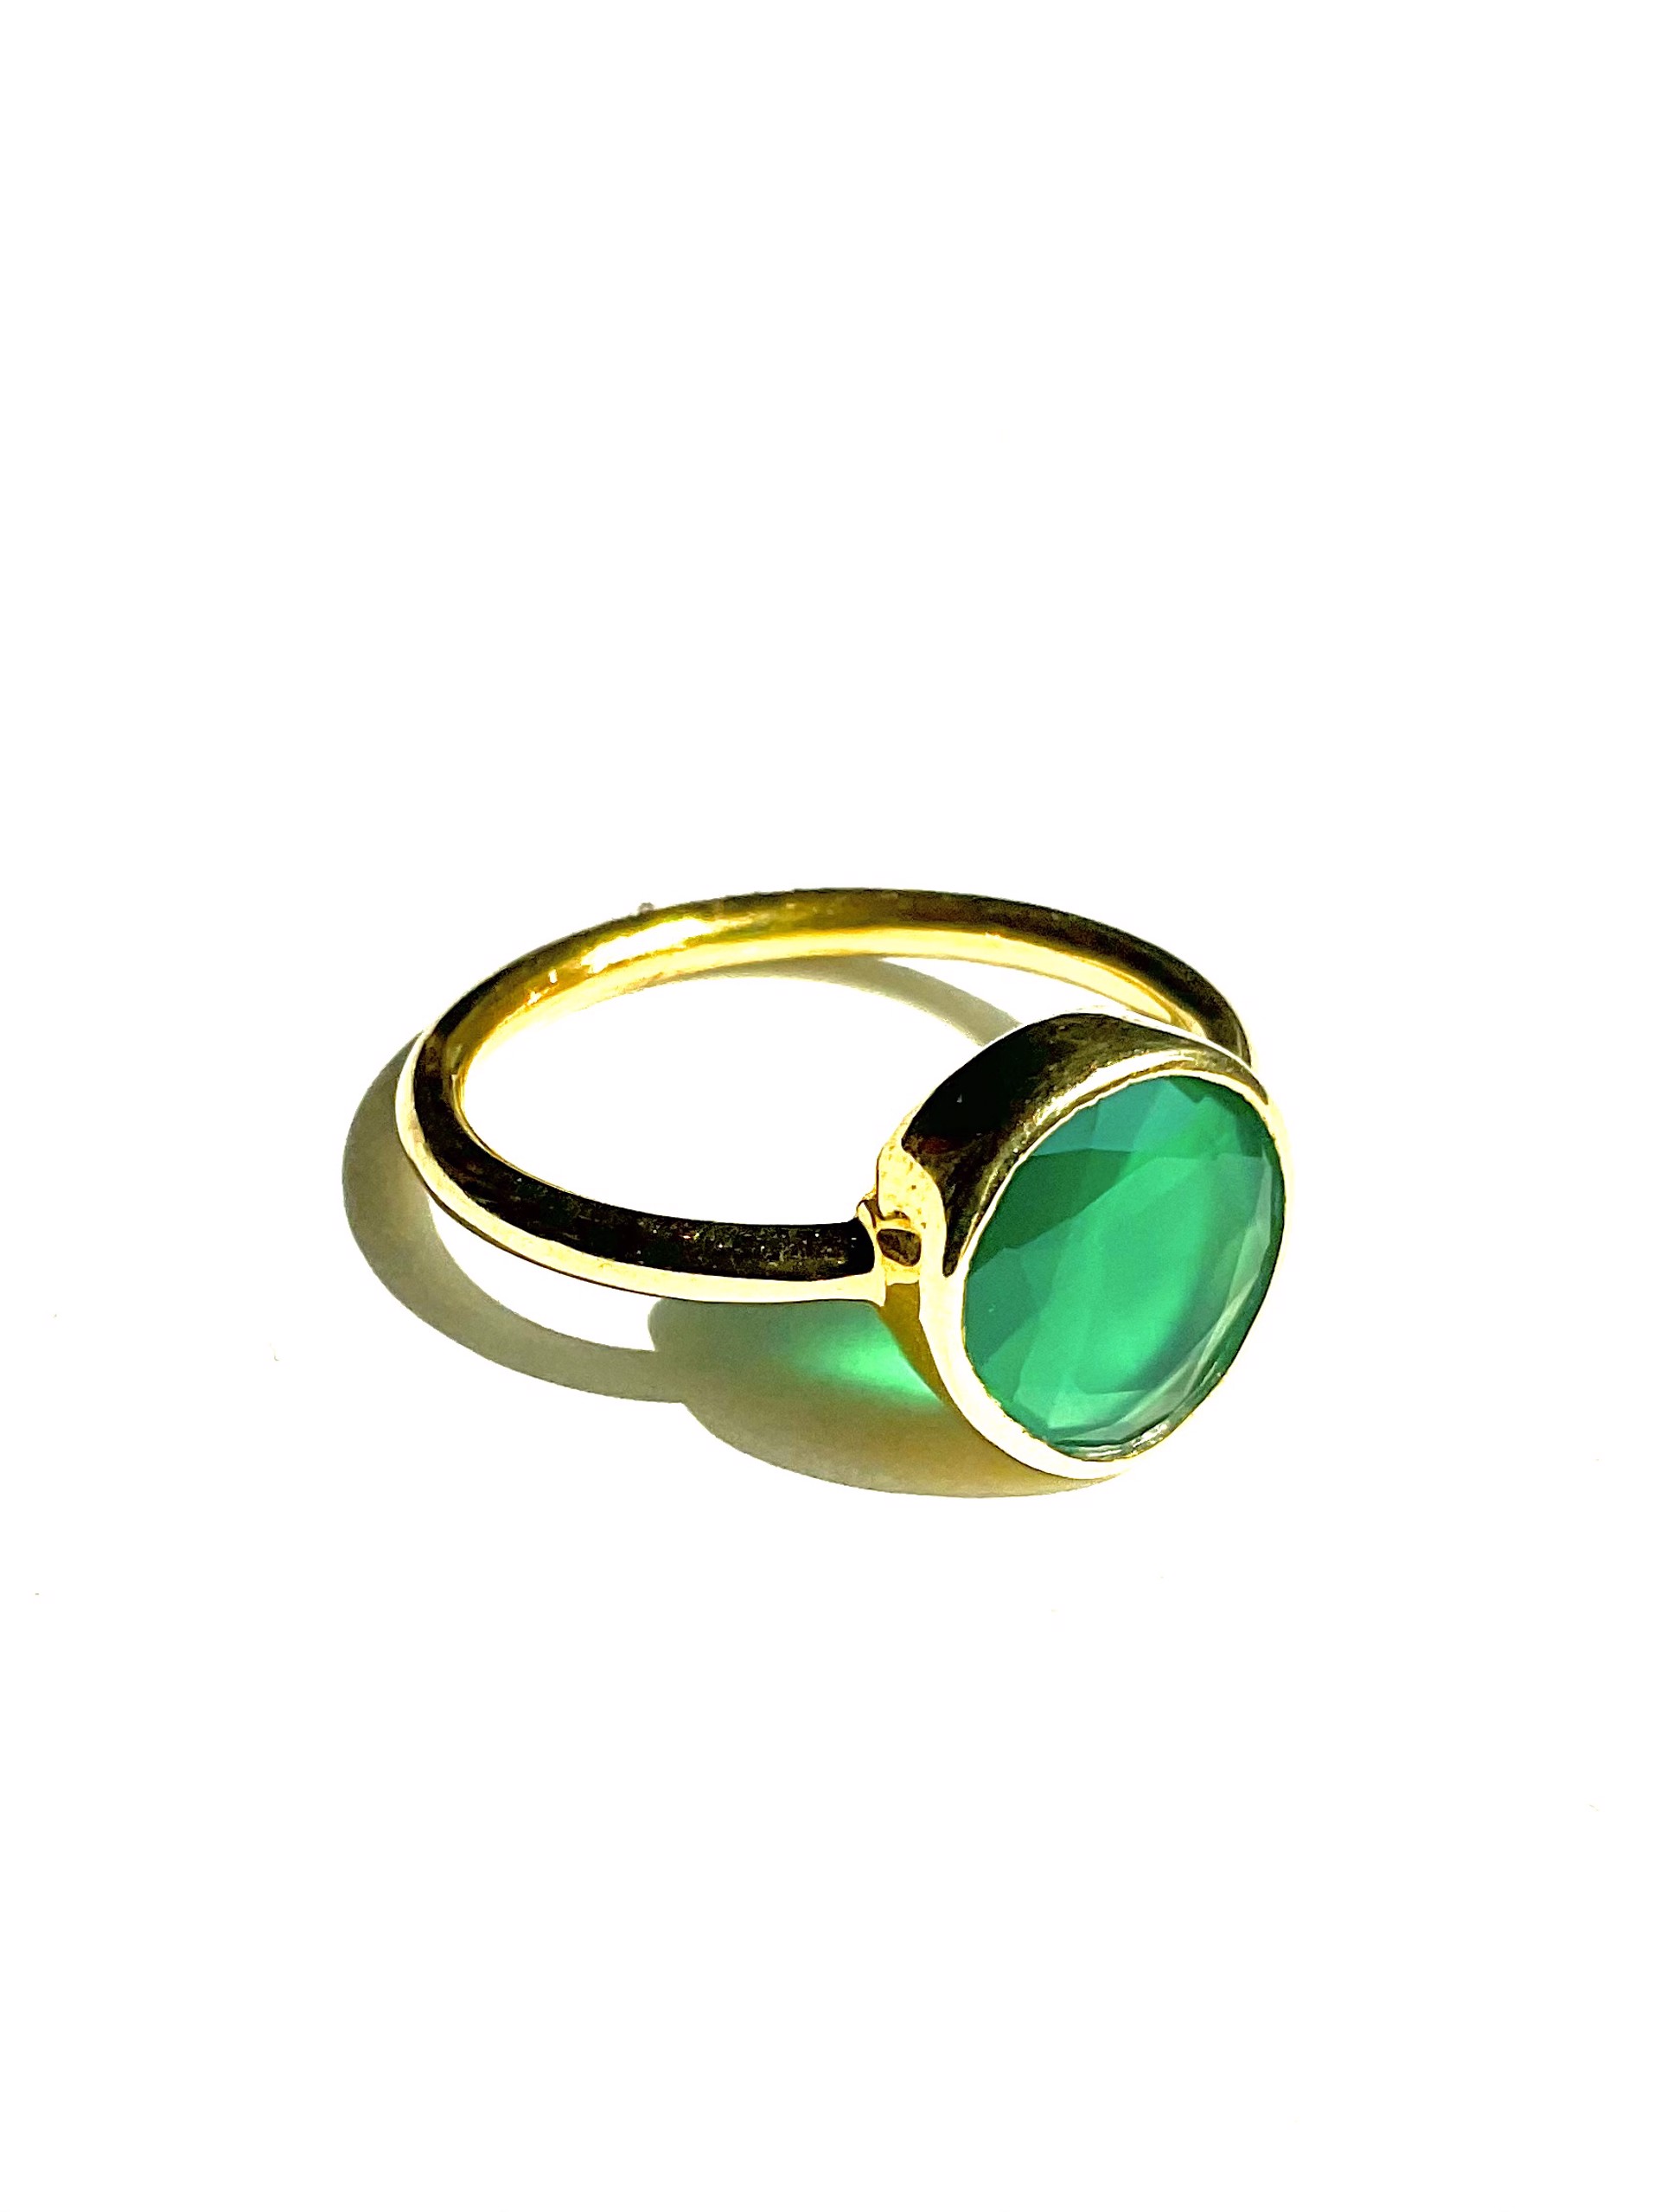 Green Onyx Round Ring by J. Catma